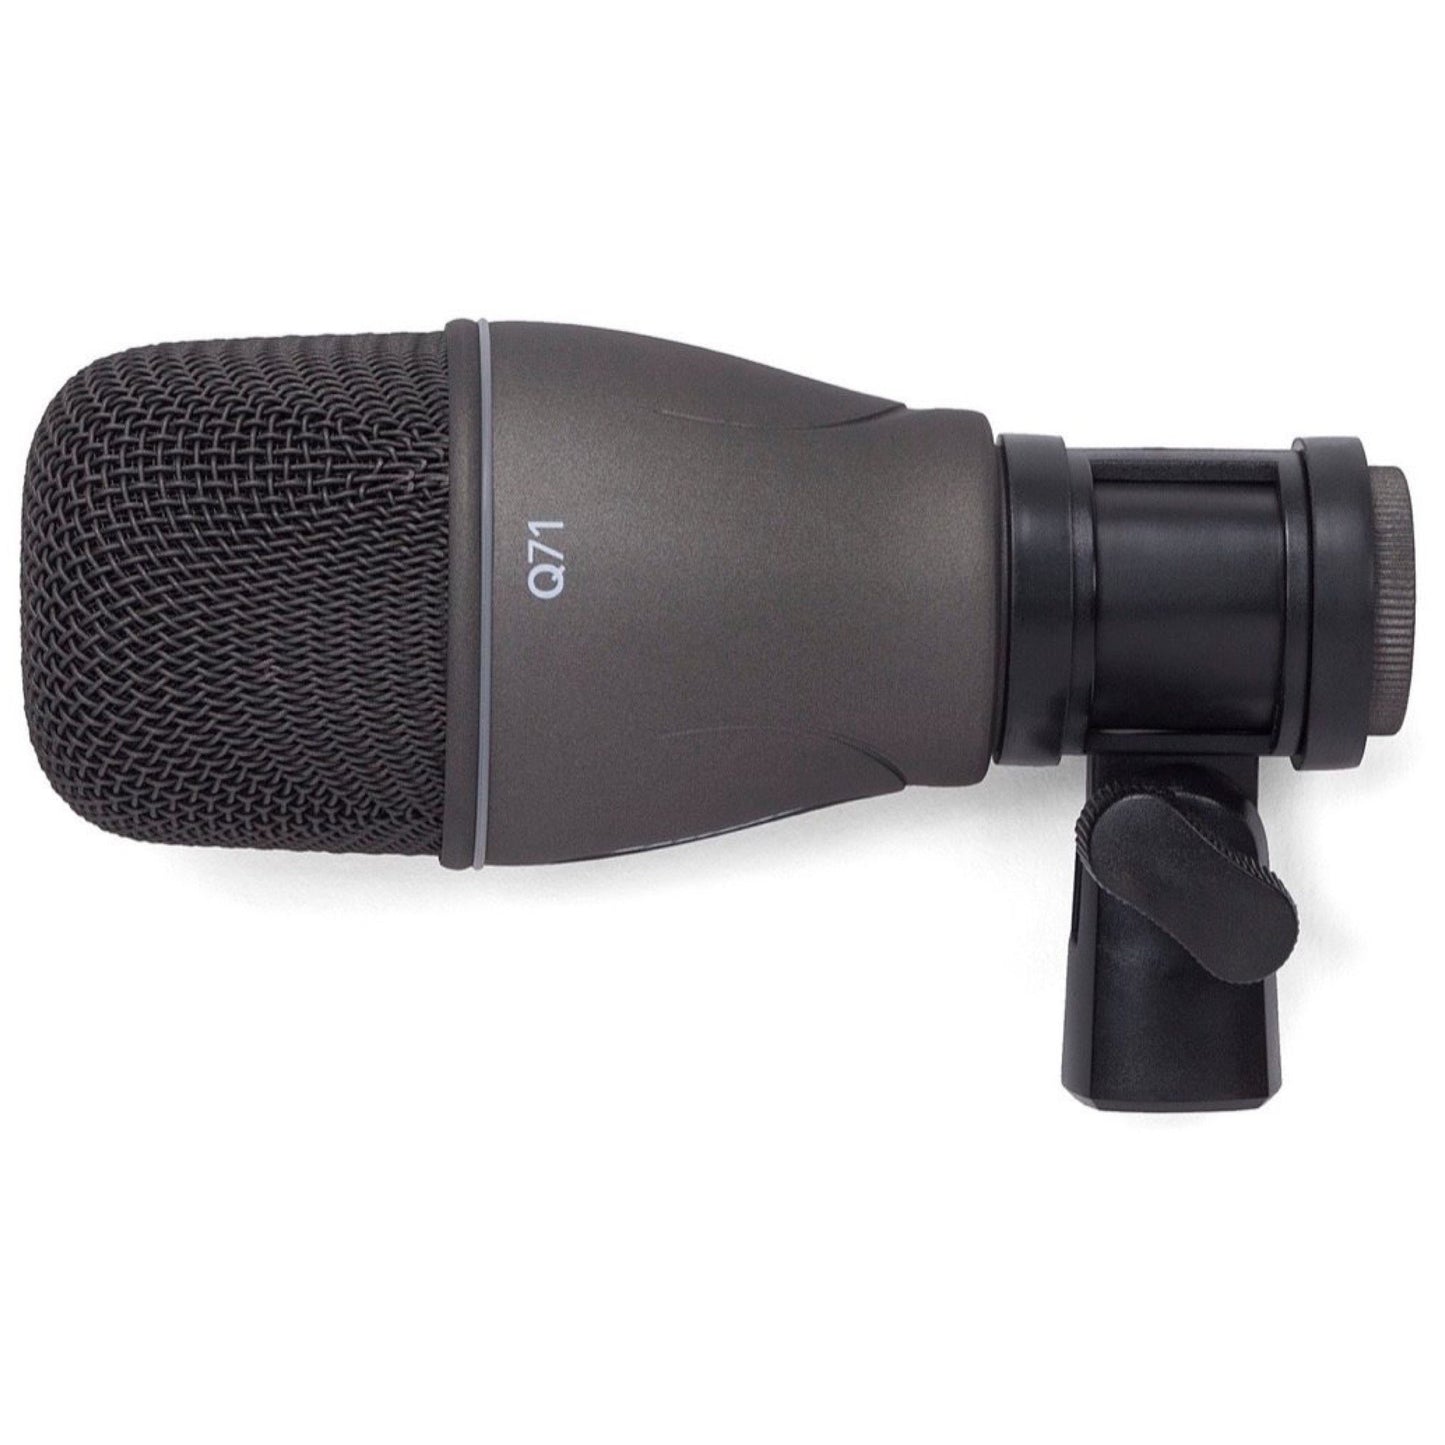 Samson DK705 Drum Microphone Set